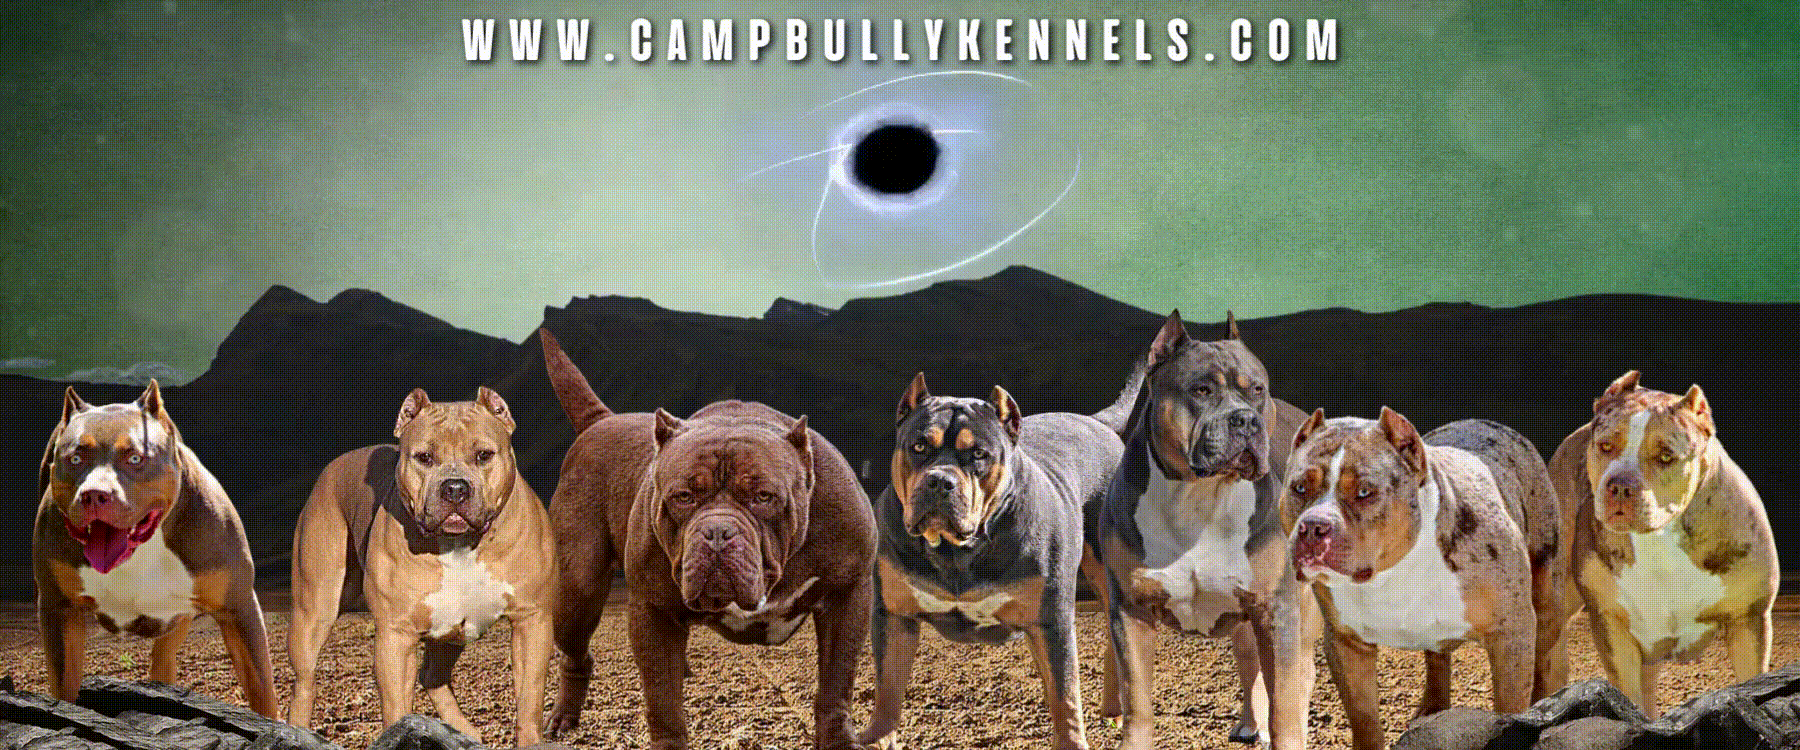 campbullykennels.com website banner american bully xl dogs